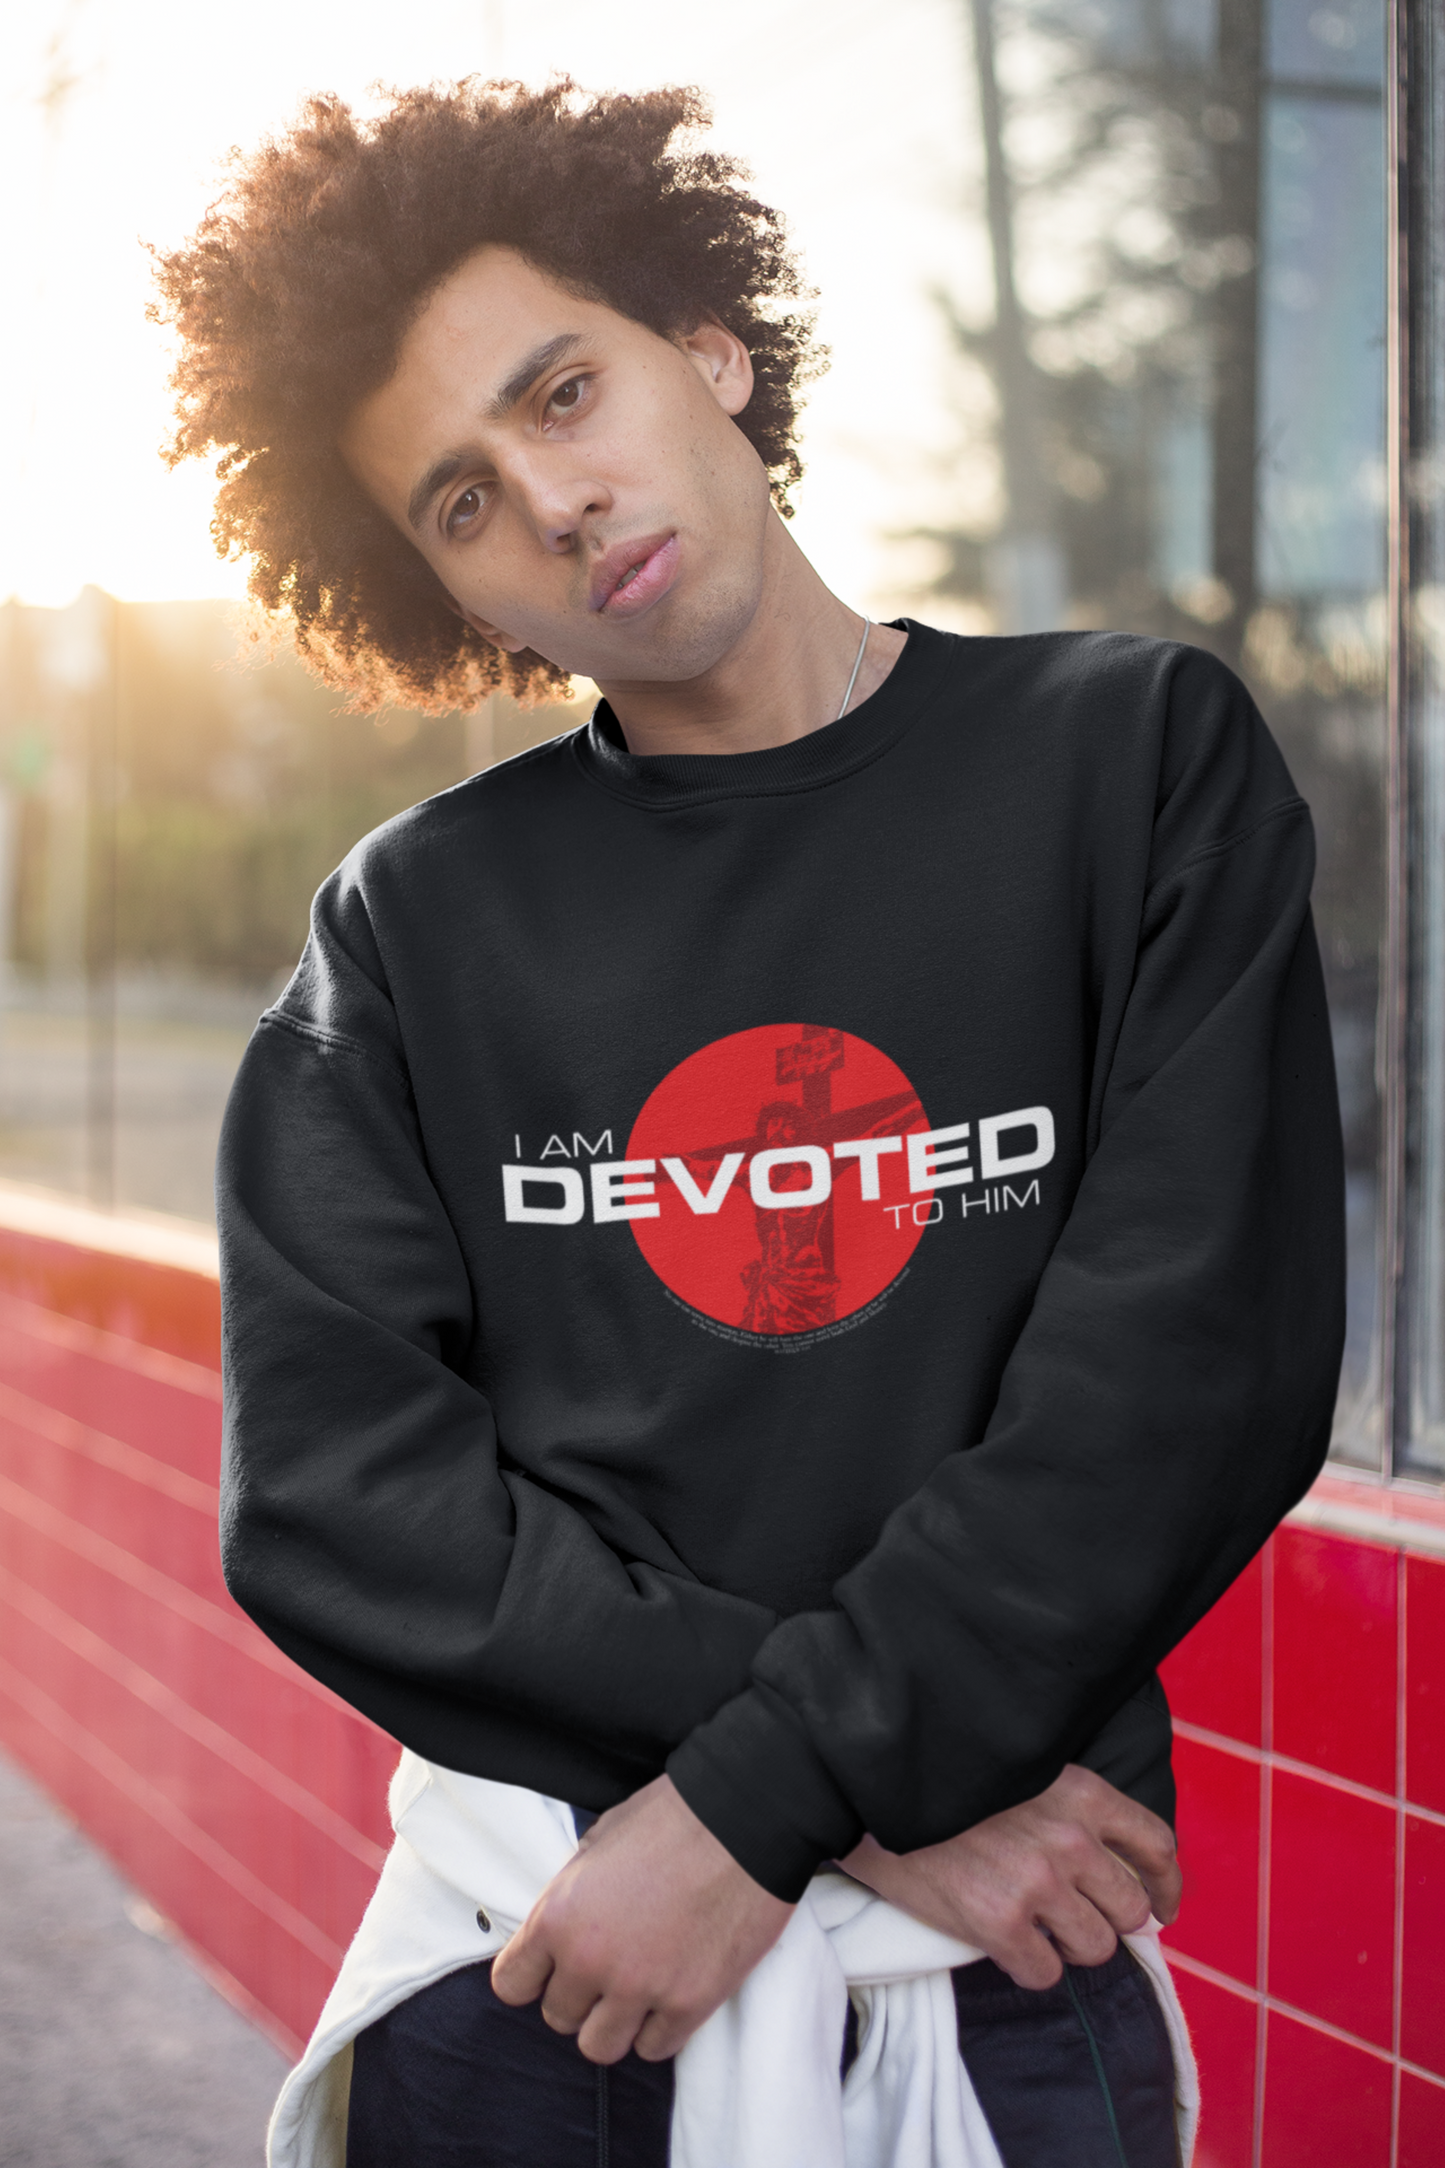 I am Devoted to Him. Sweatshirt.